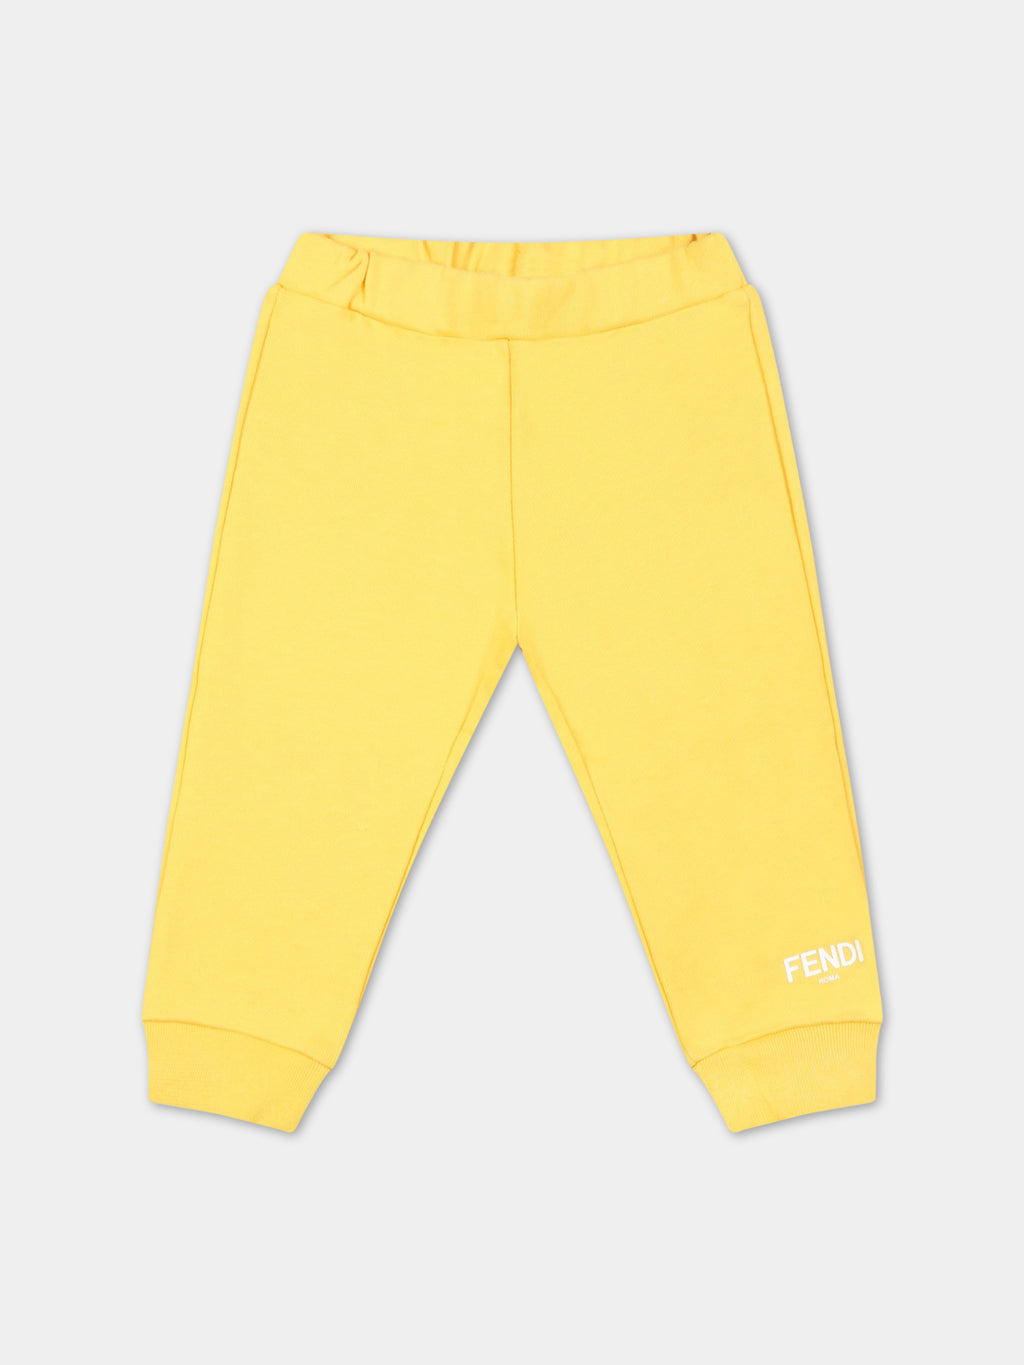 Yellow sweatpants for babykids with white logo